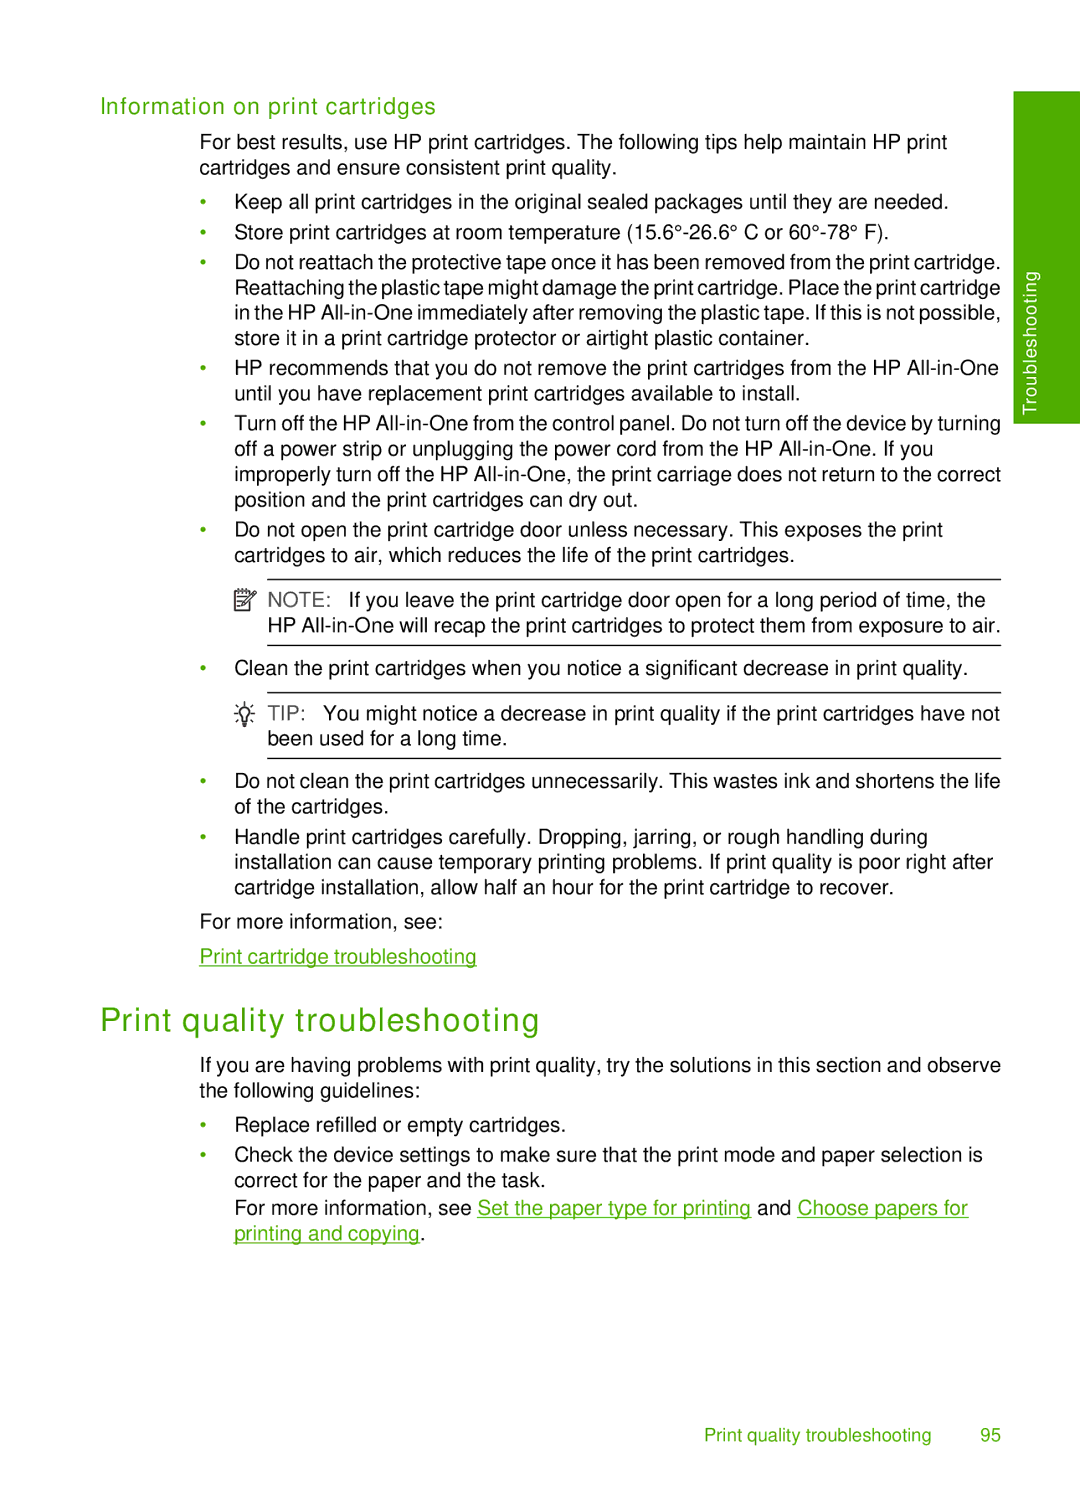 HP F4172, F4140, F4185, F4190, F4180 manual Print quality troubleshooting, Information on print cartridges 